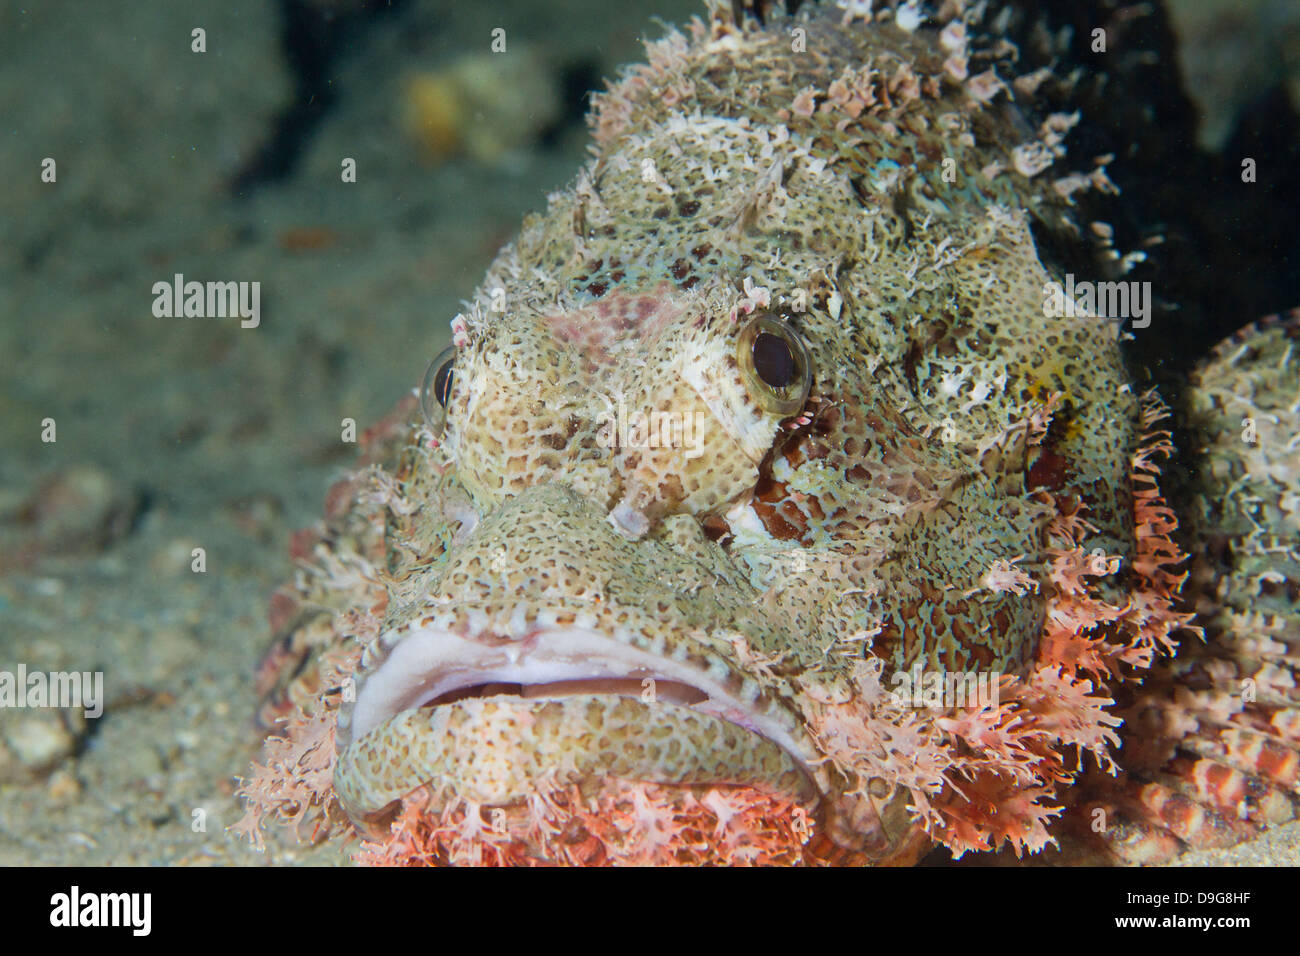 Tassled scorpionfish - Scorpaenopsis oxycephala, Mabul, Borneo, Malaysia Stock Photo